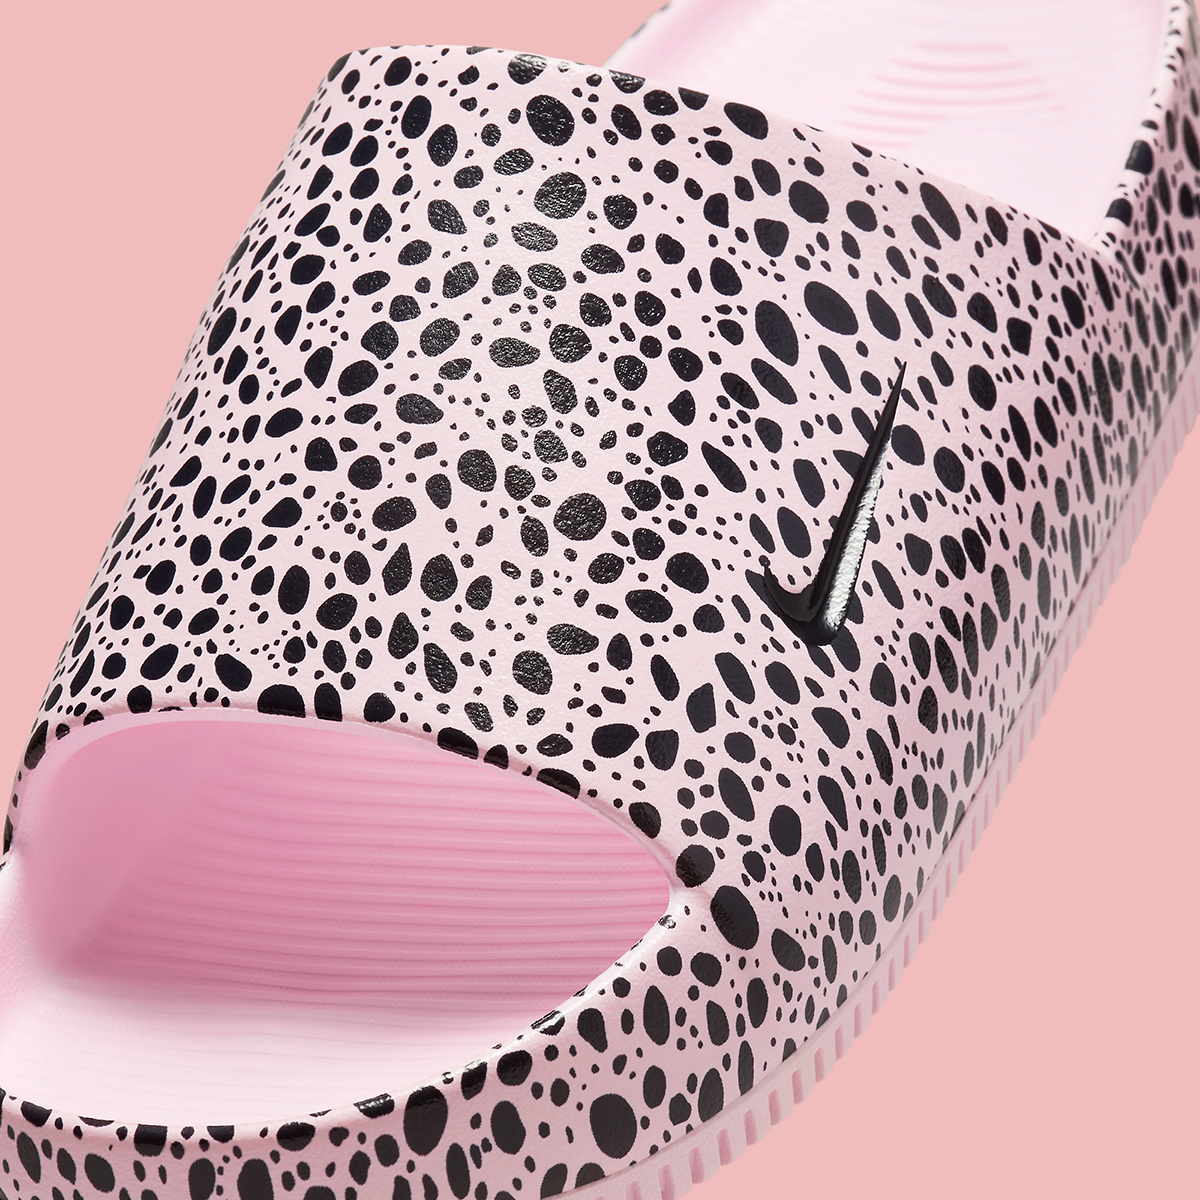 paint splatter nike shox sneakers shoes amazon Safari Pink Hm5072 600 3